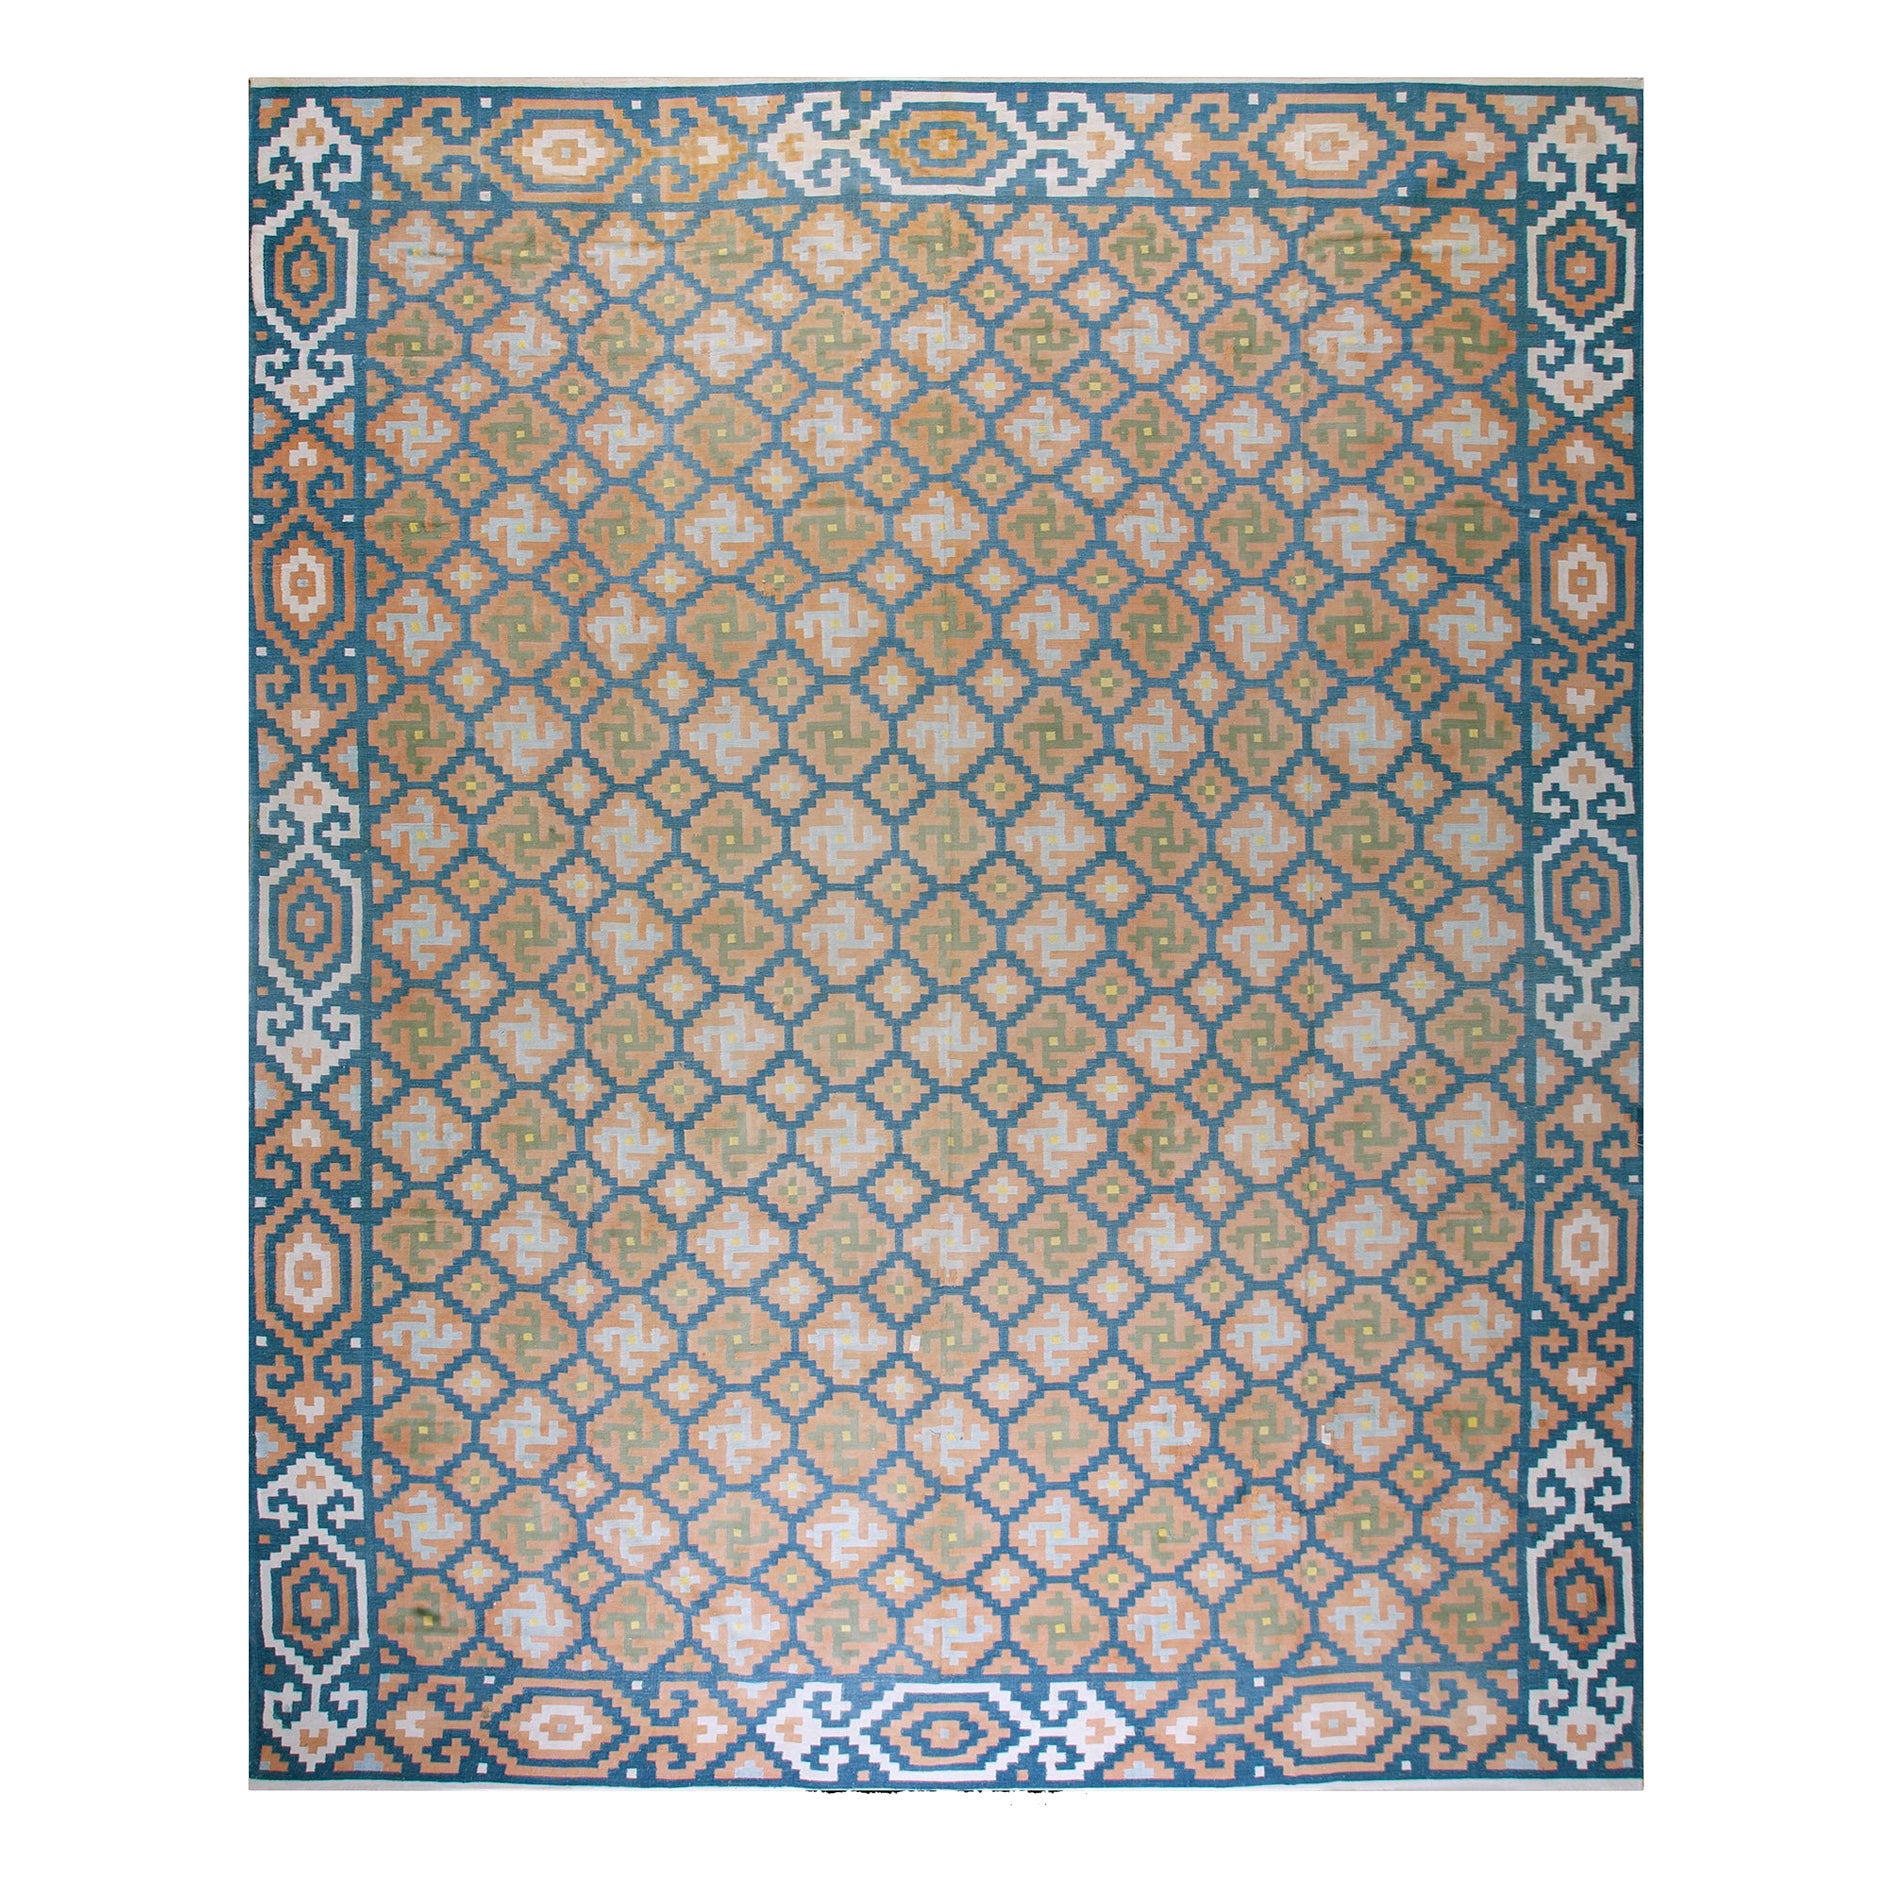 1930s Indian Cotton Dhurrie Carpet ( 12'2" x 15'2" - 371 x 462 ) For Sale